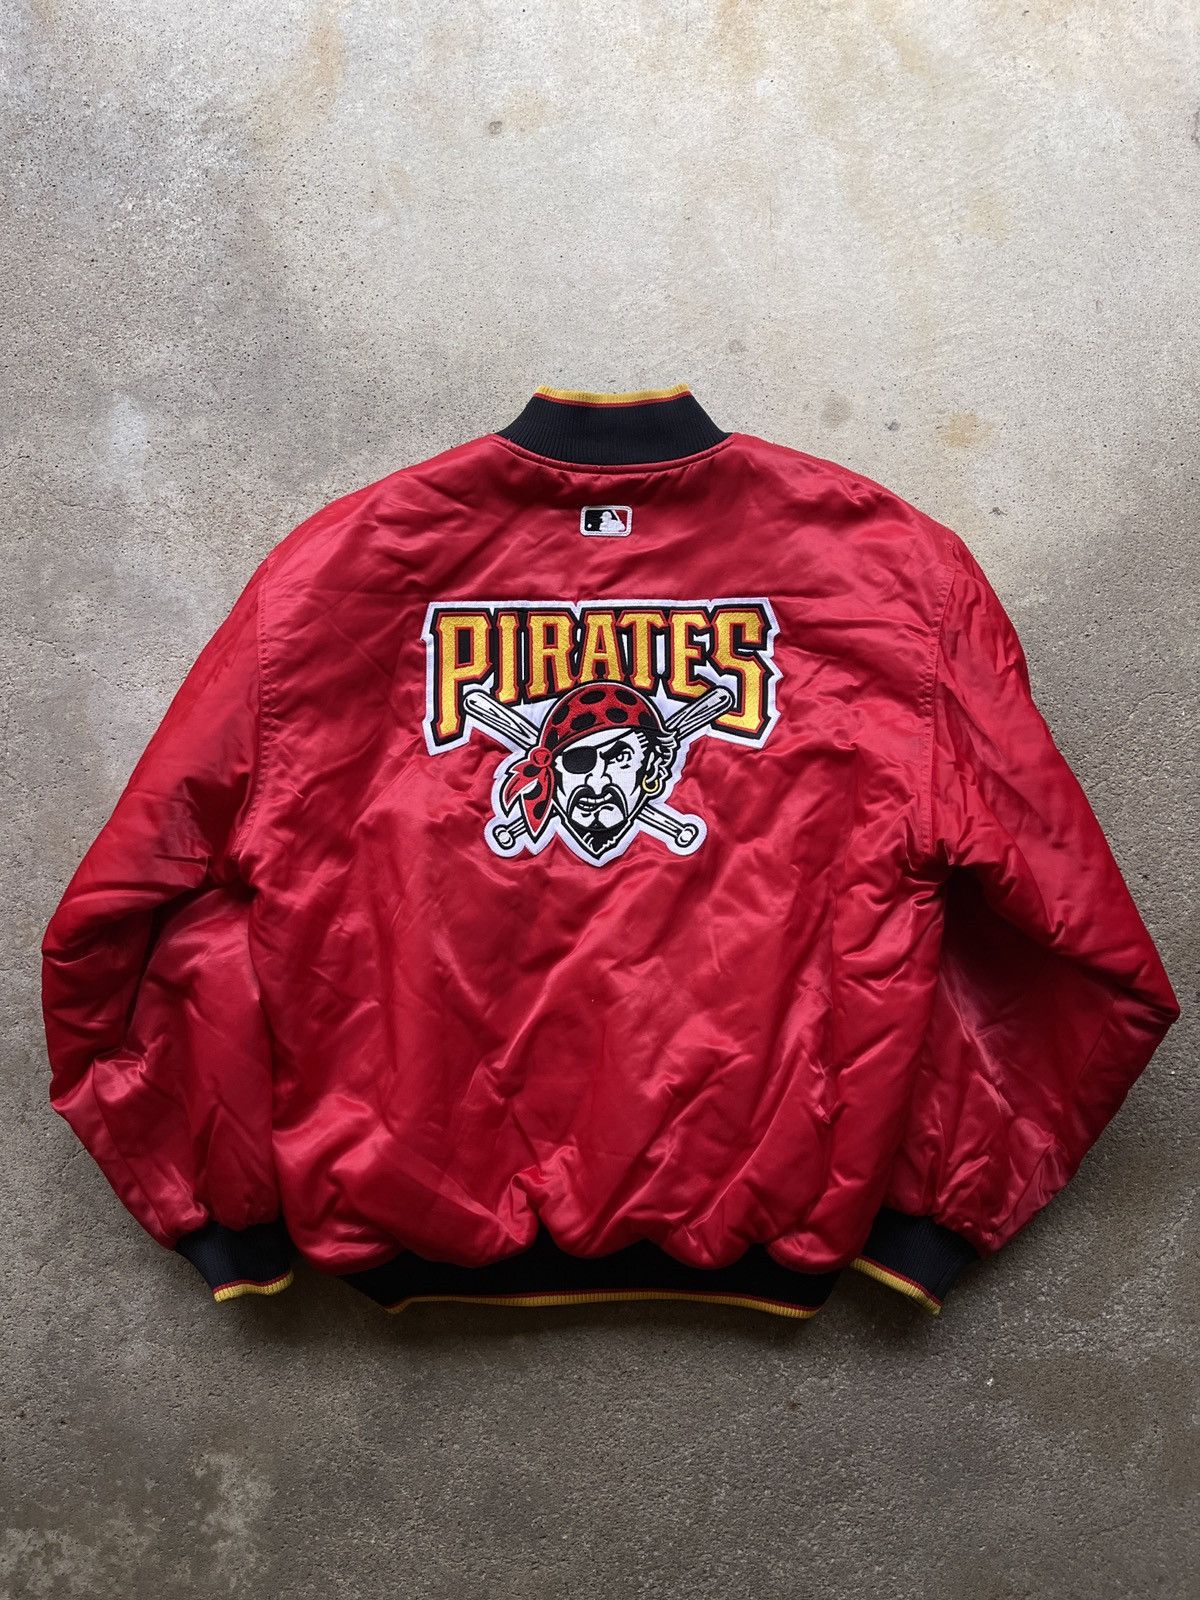 Vintage 80s MLB Pittsburgh Pirates Black Bomber Jacket - M